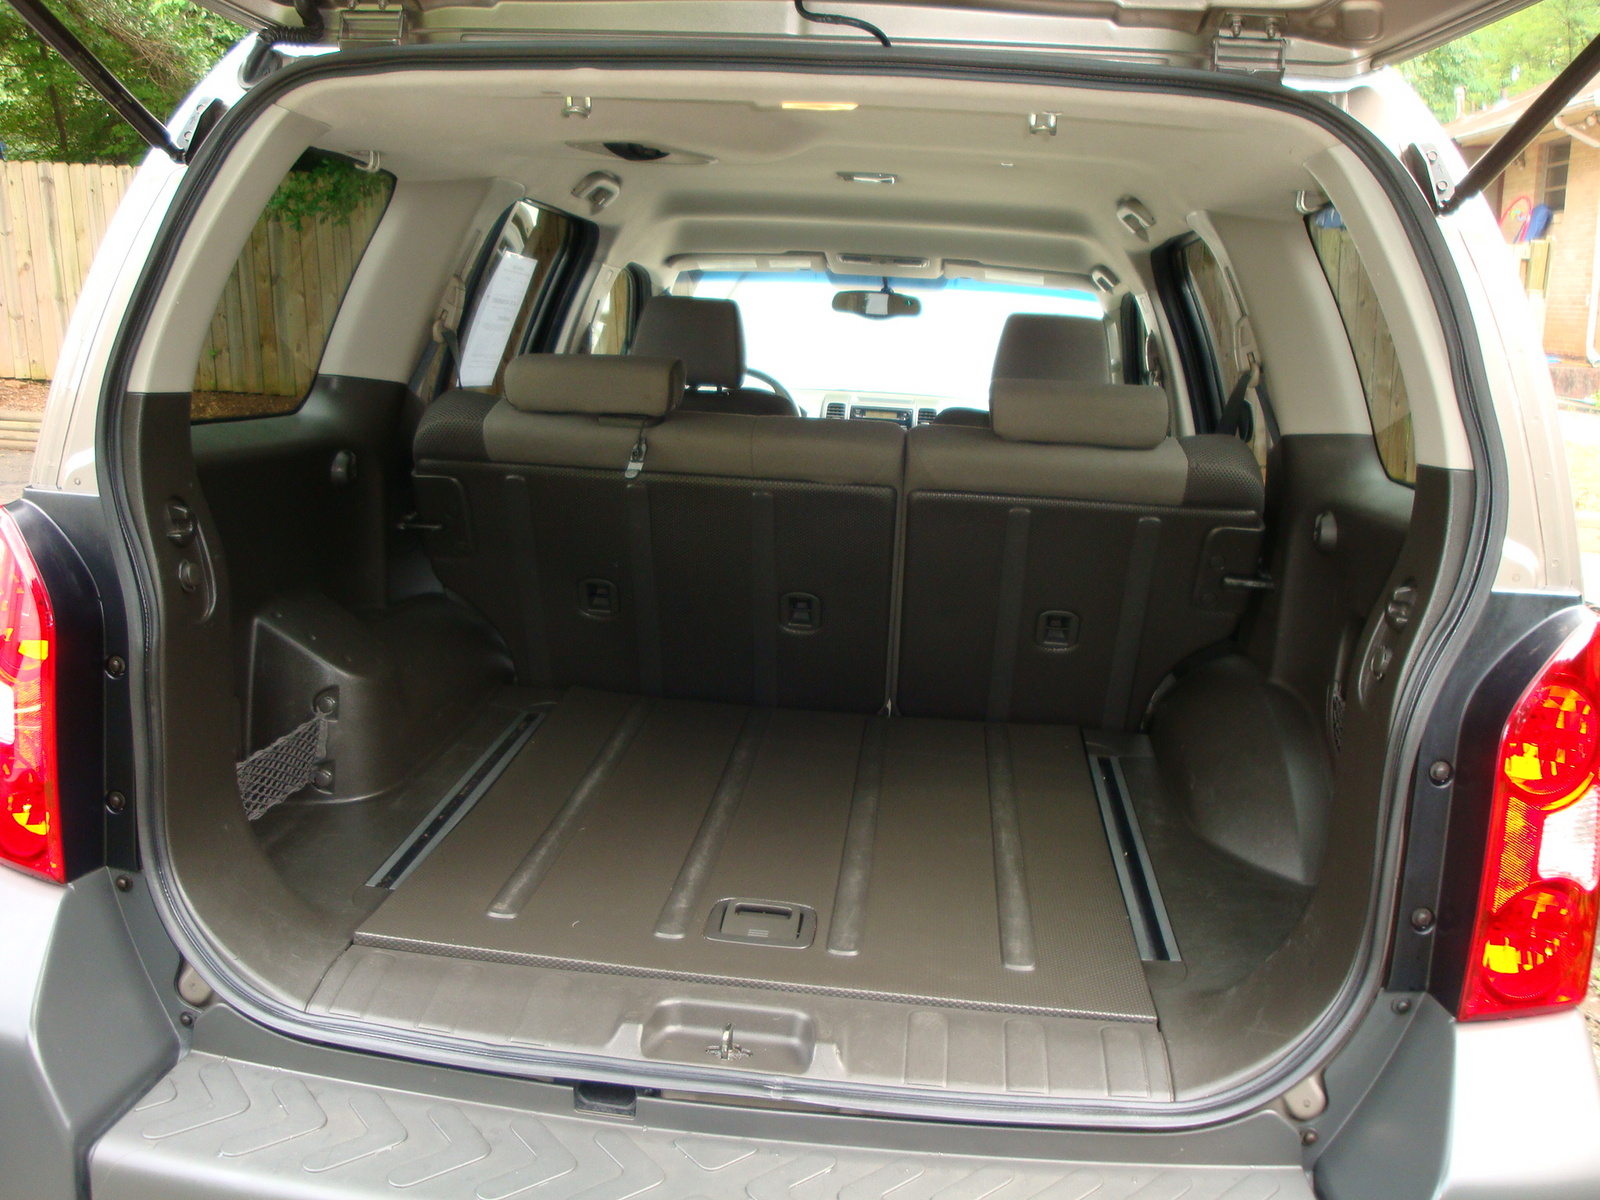 2005 Nissan xterra interior dimensions #4